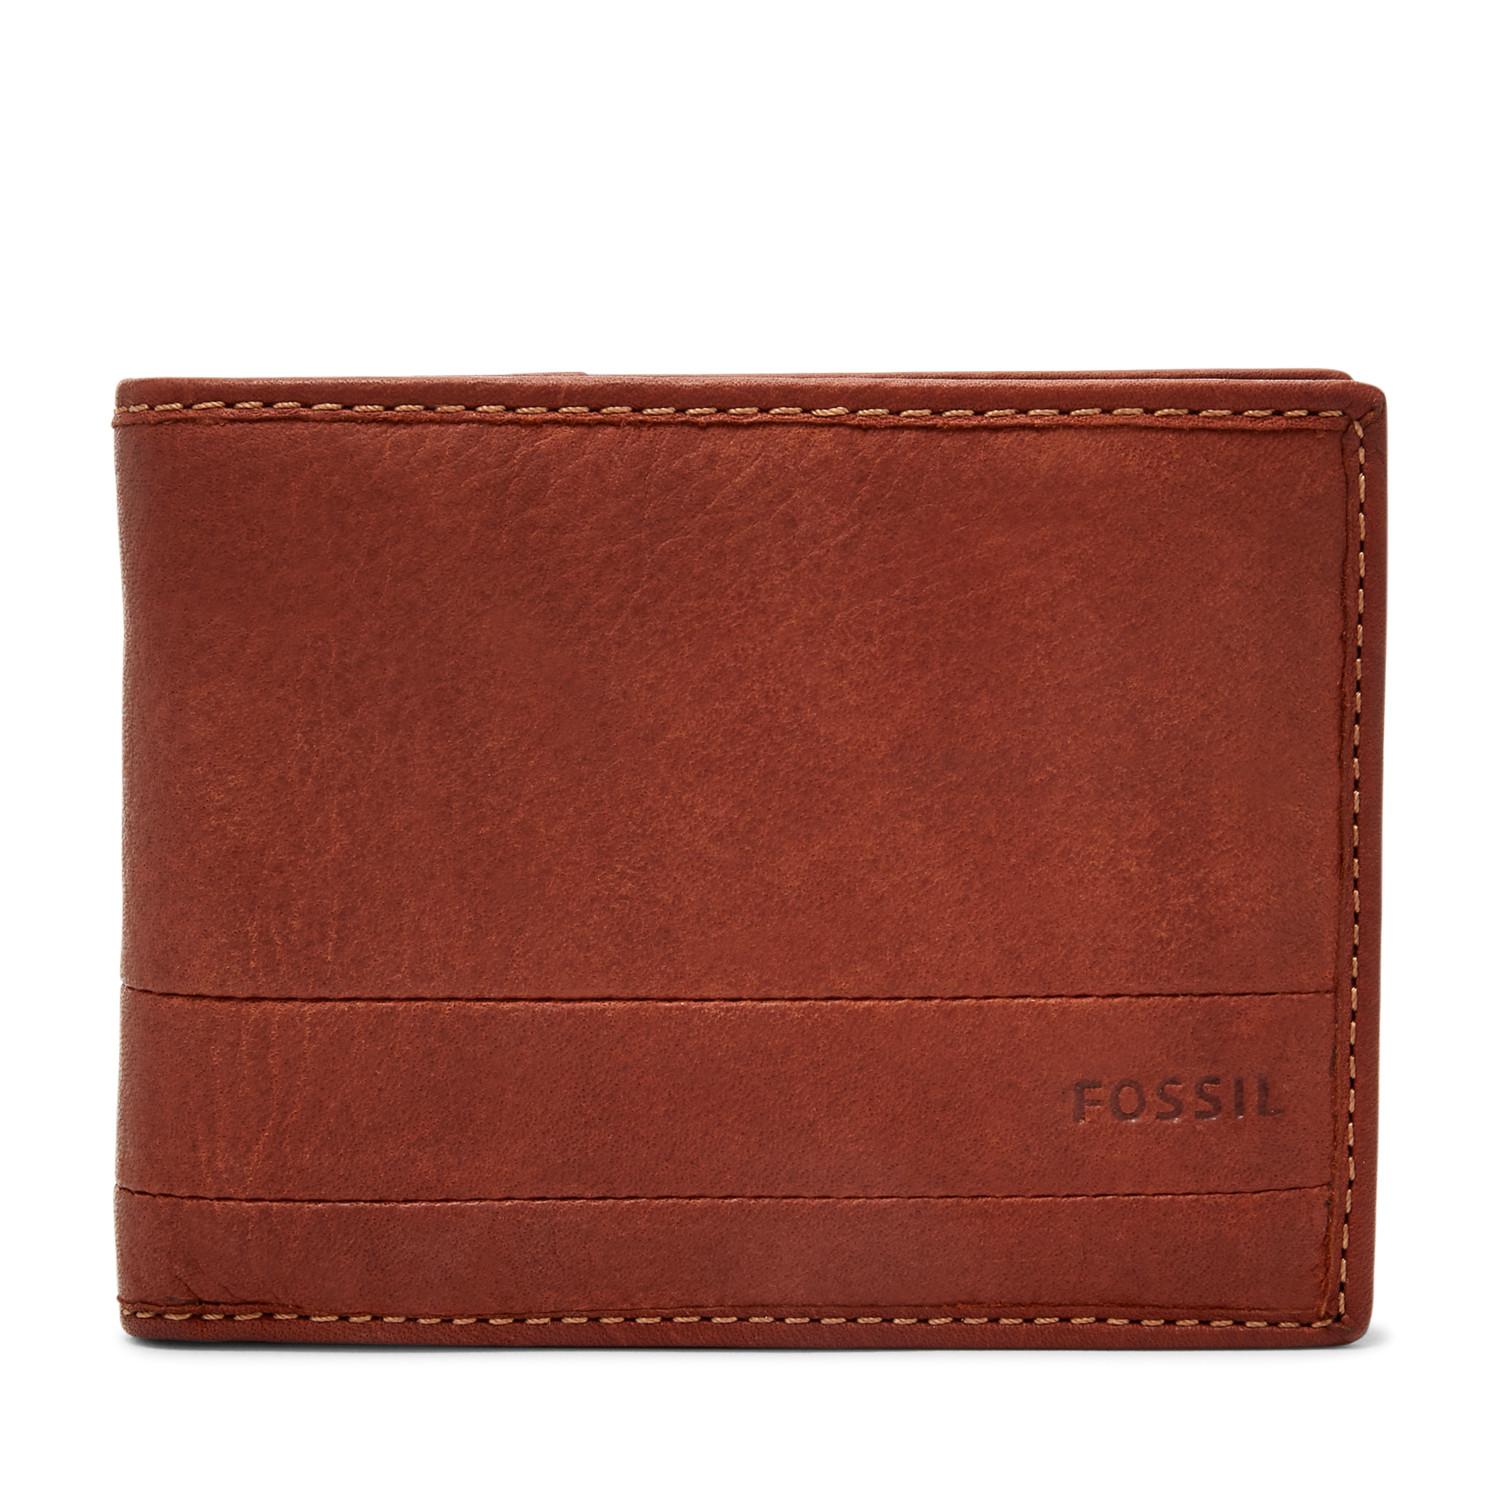 Fossil Leather Lufkin International Traveler Wallet Sml1391210 in Brown ...